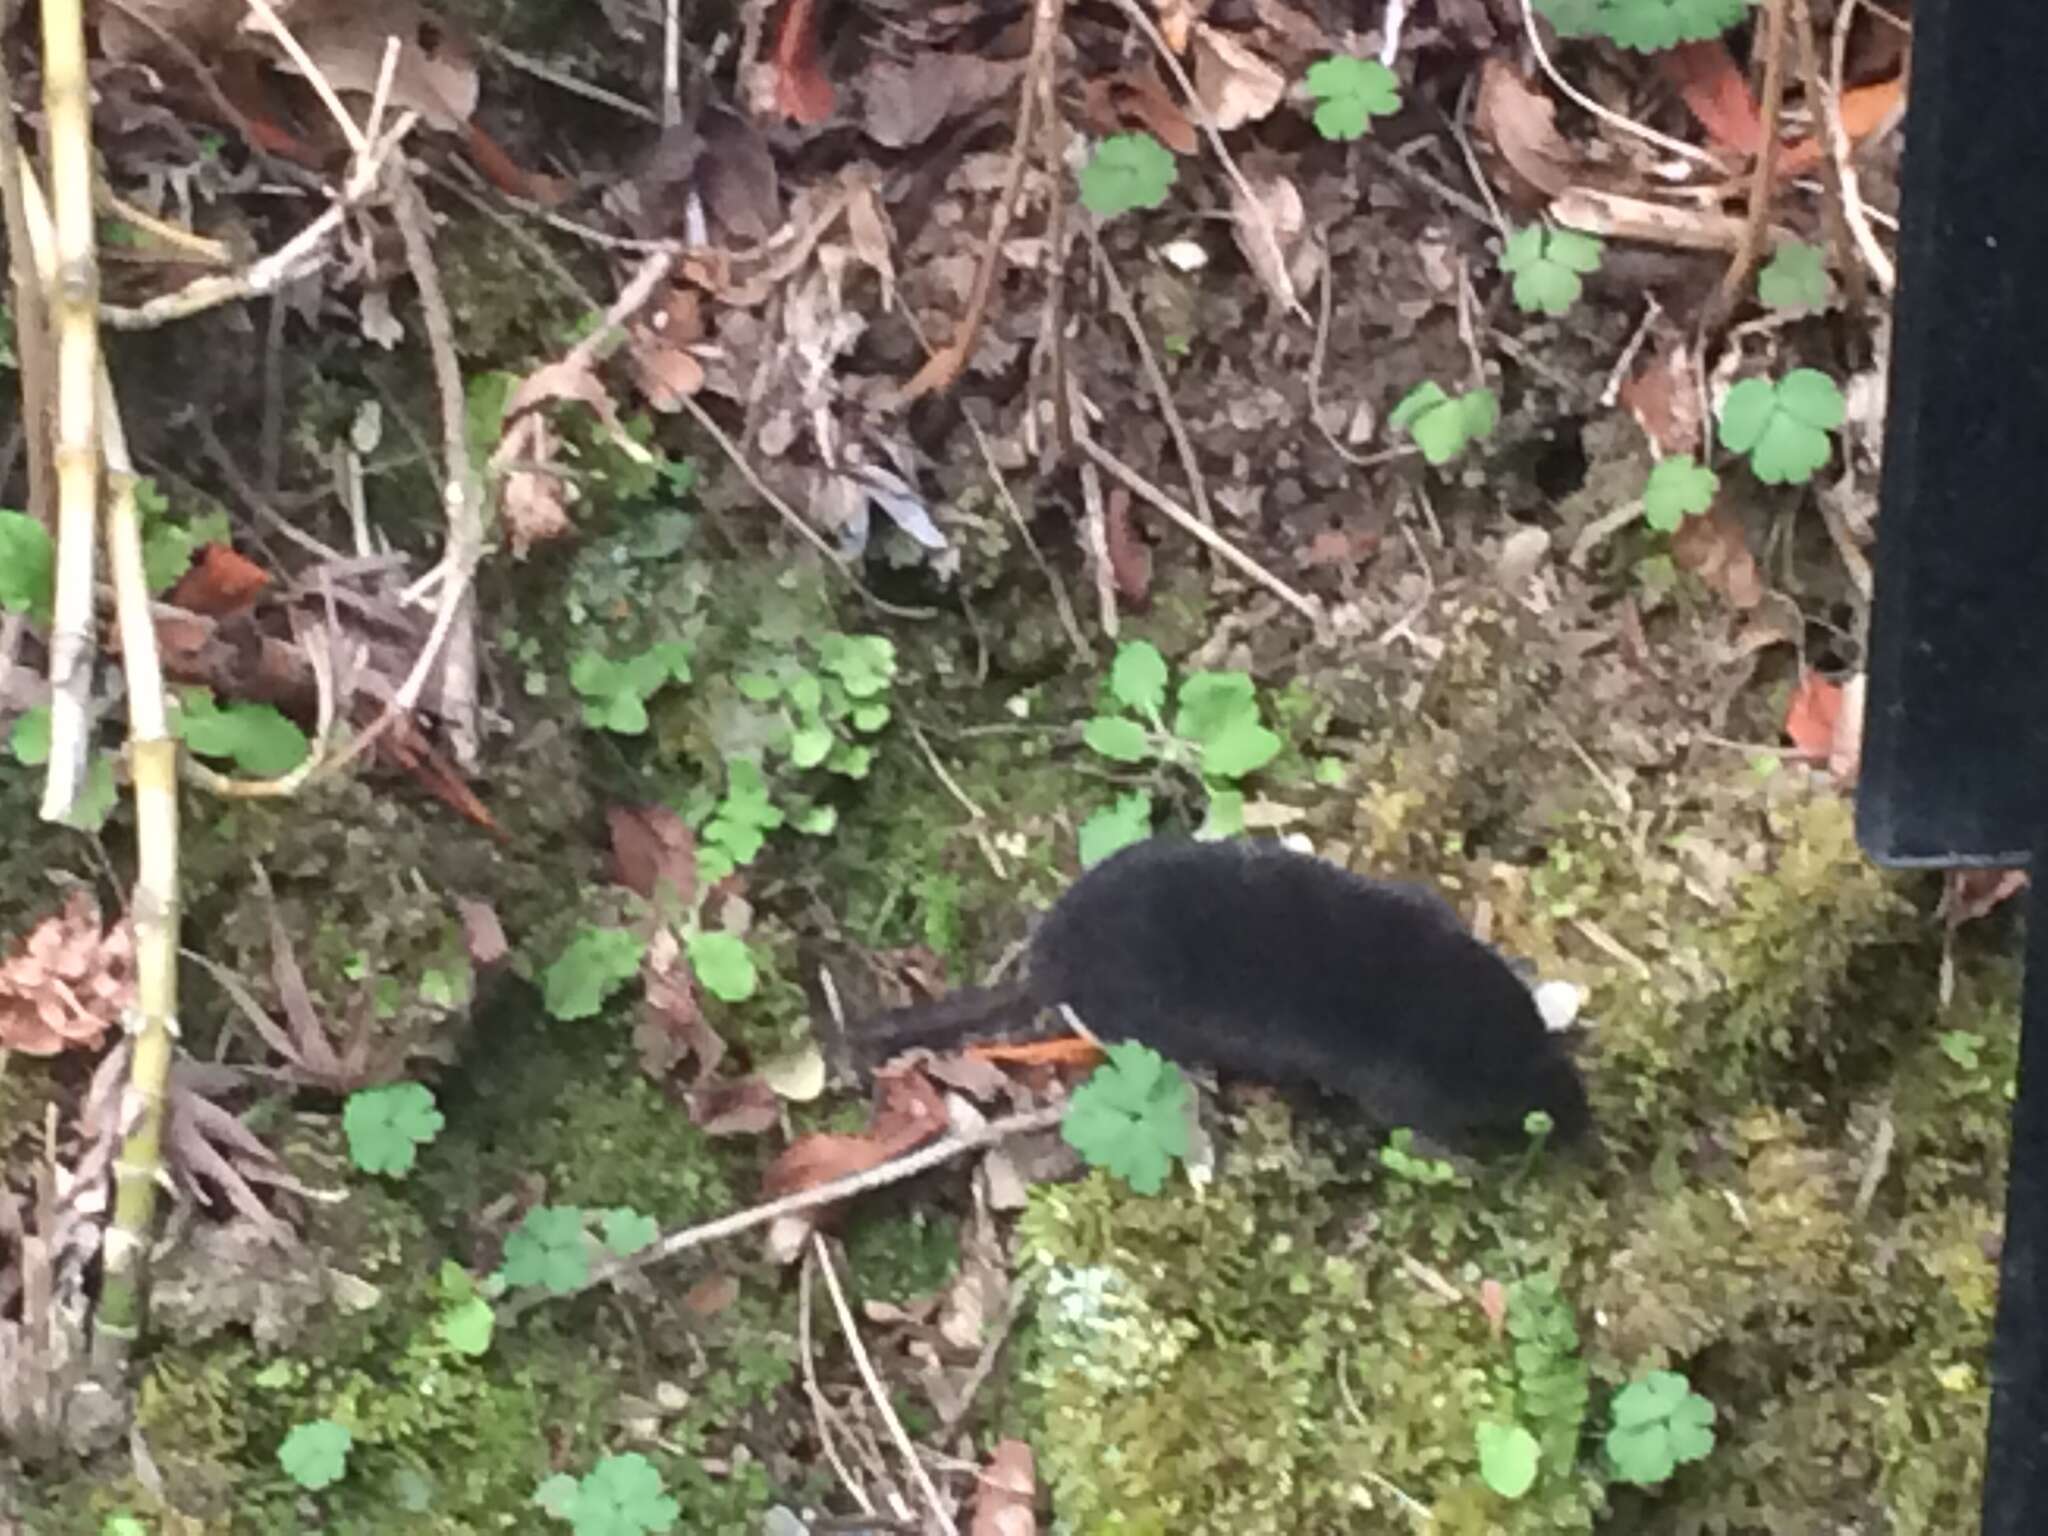 Image of greater Japanese shrew-mole